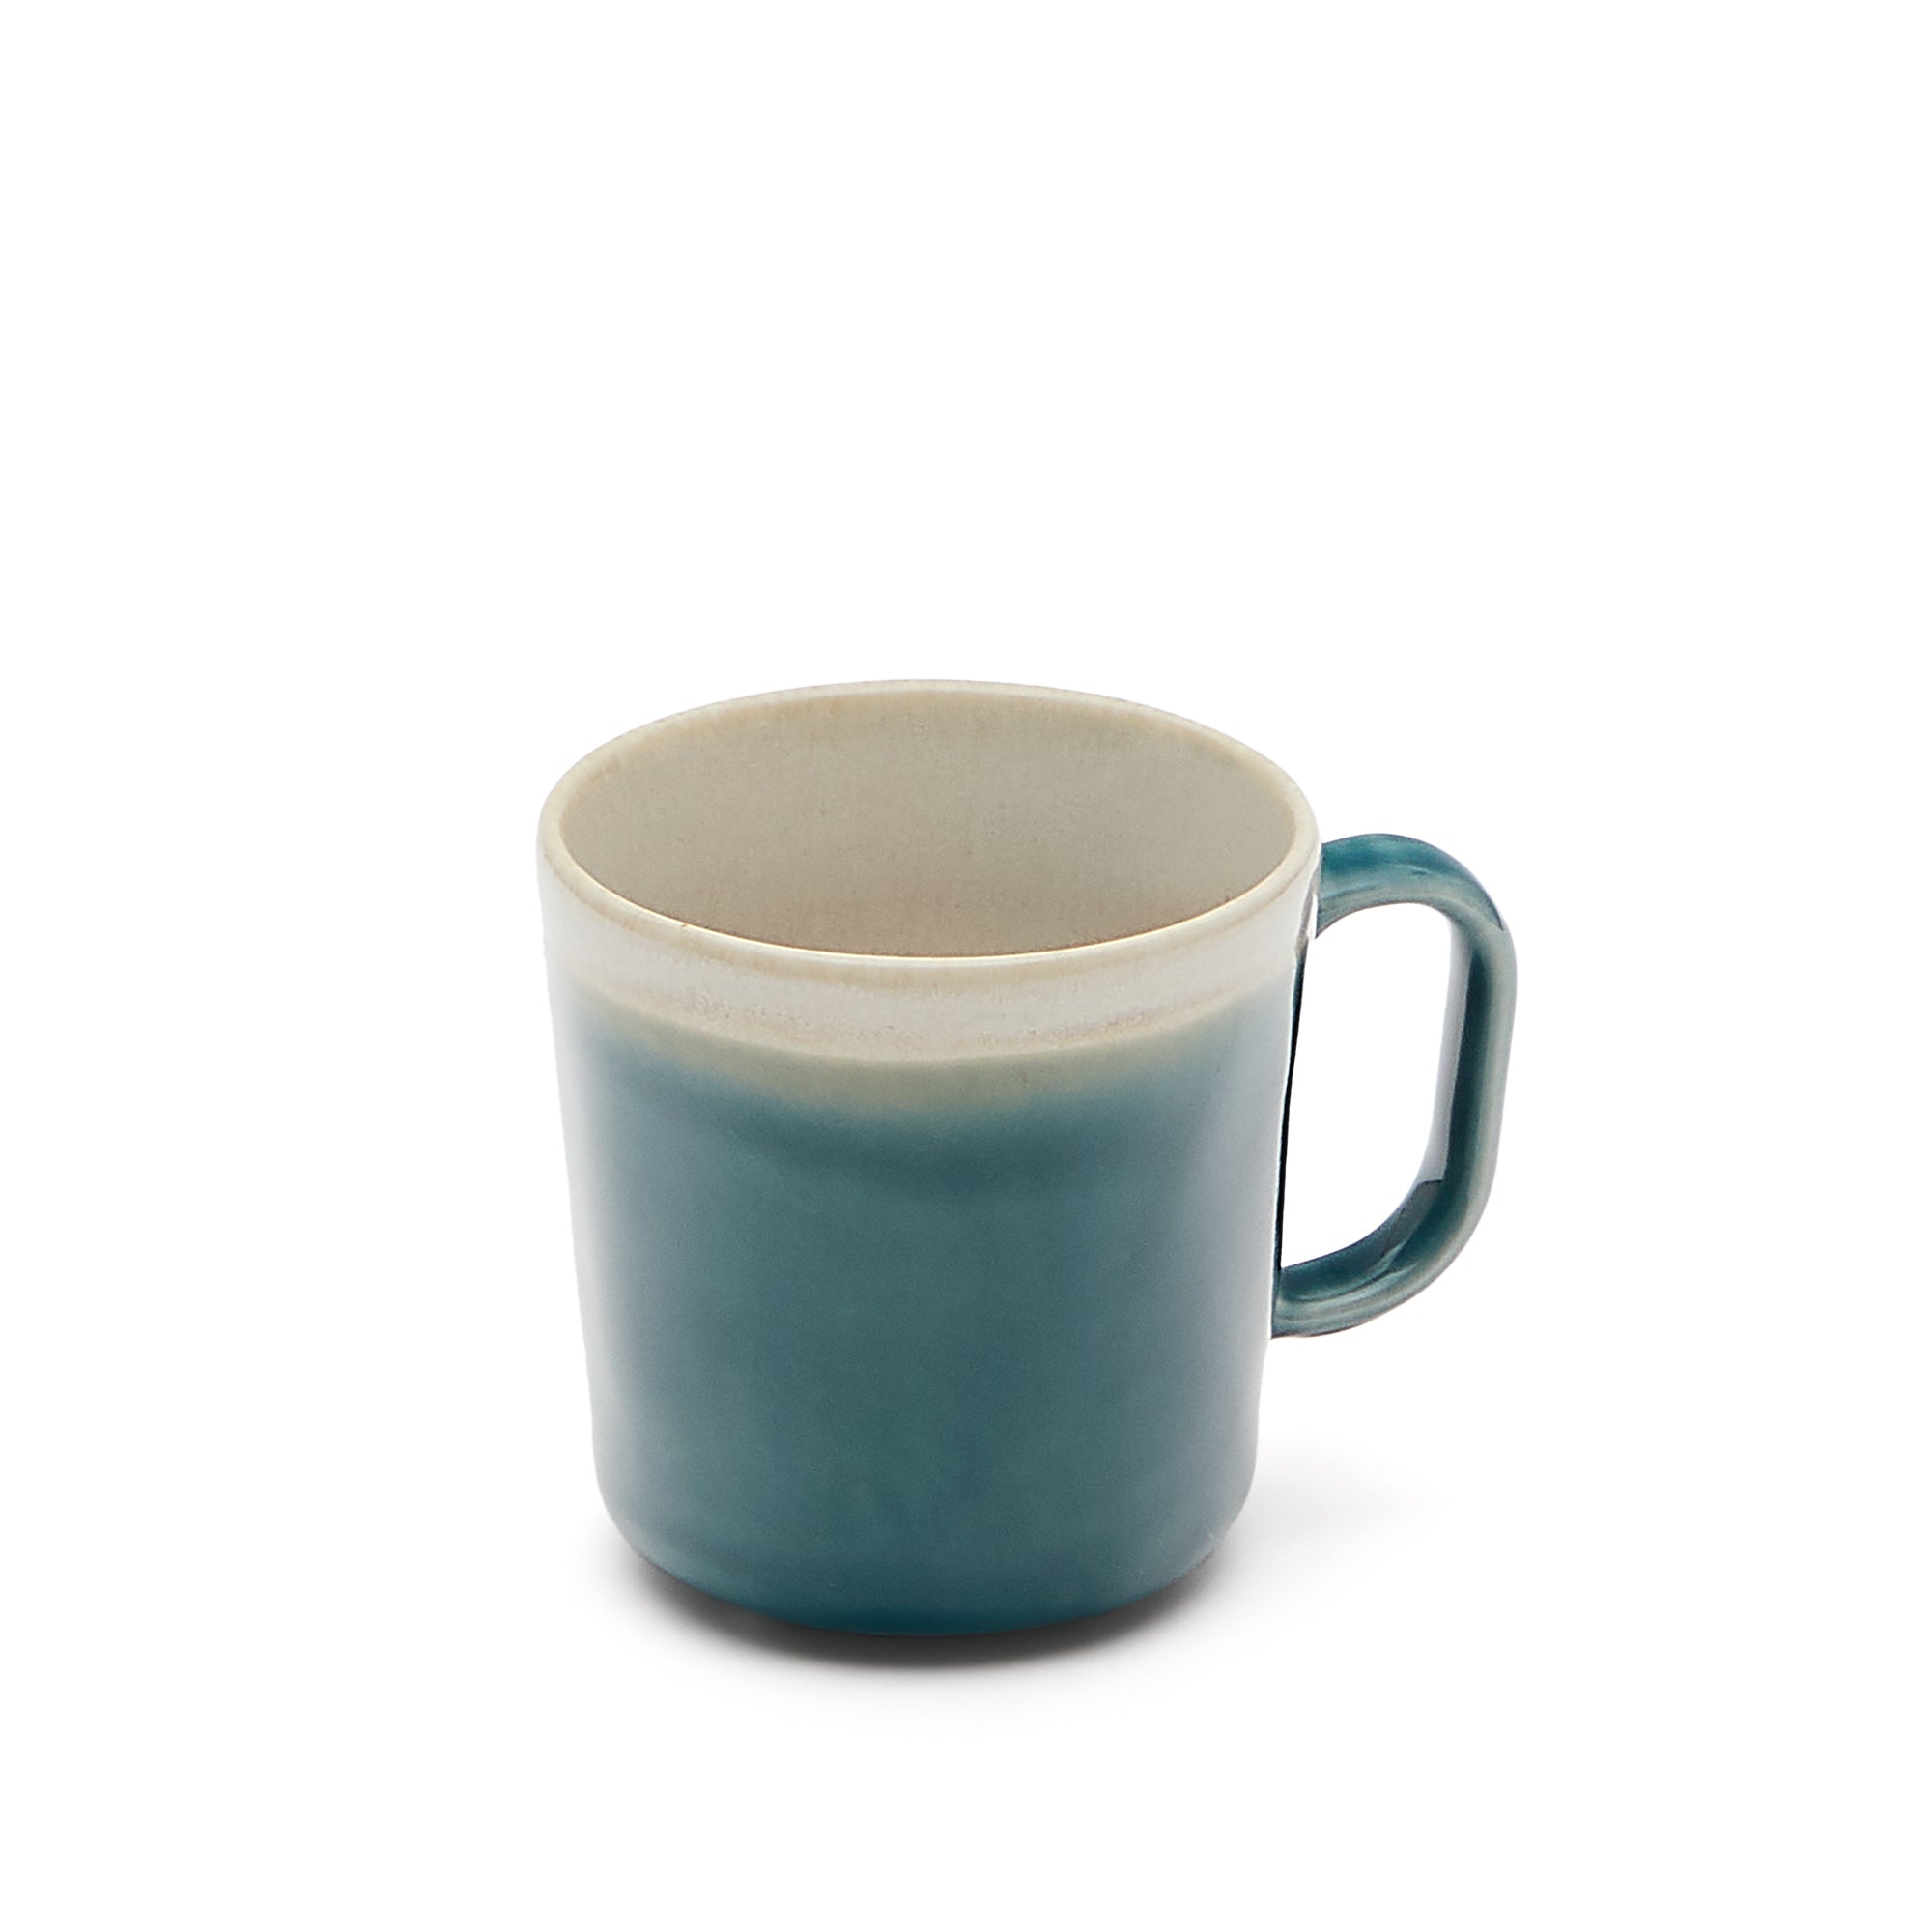 Sanet blue and white ceramic mug